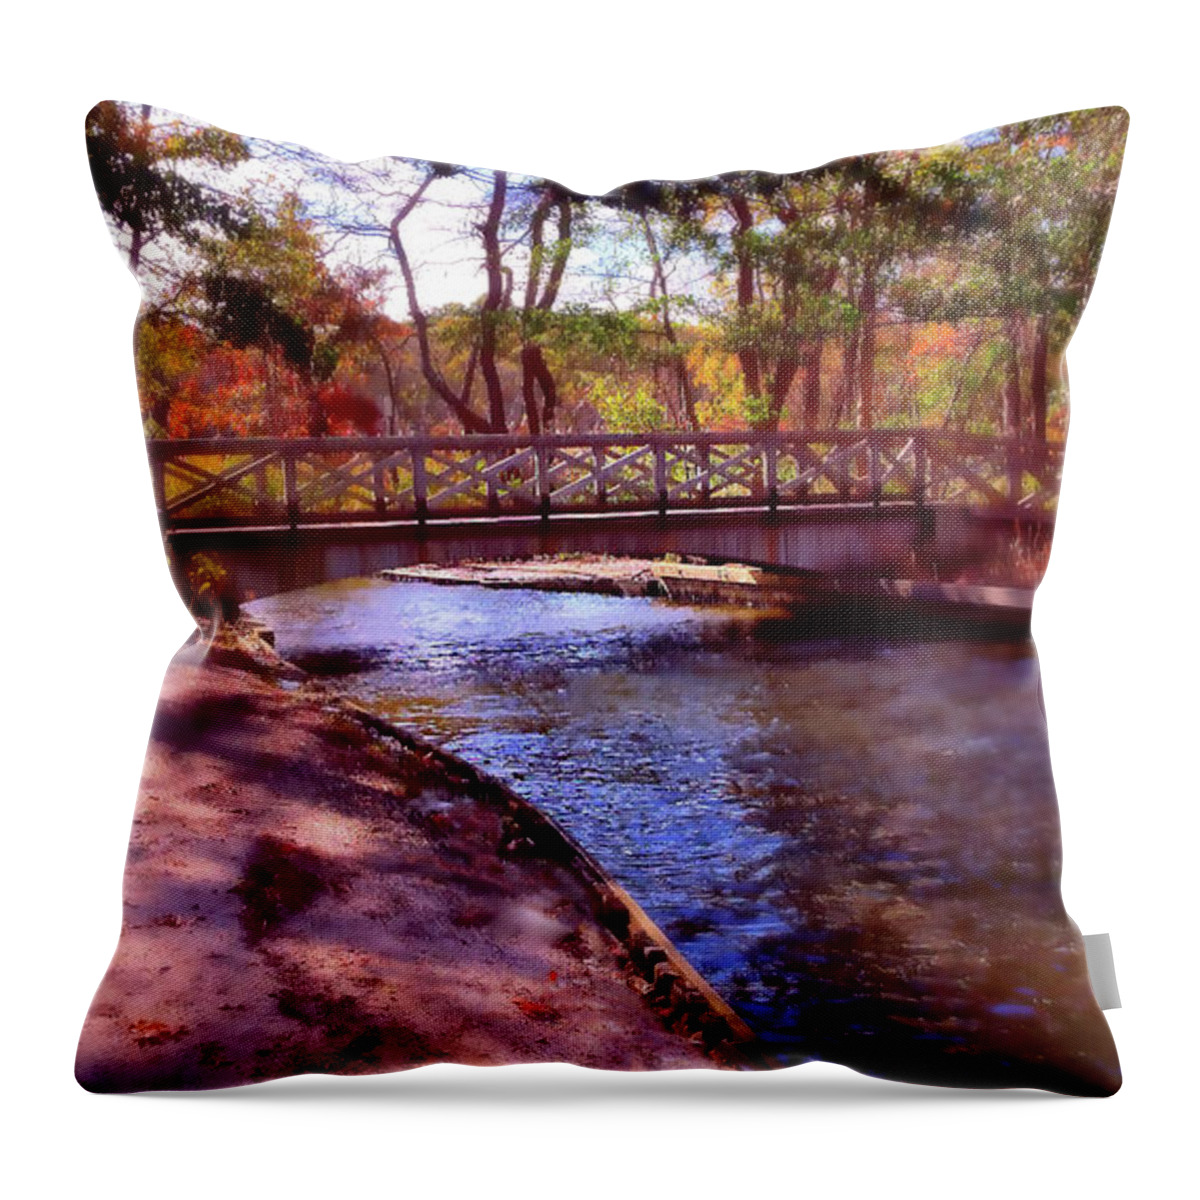 Autumn Throw Pillow featuring the mixed media Island Bridge in Autumn by Stacie Siemsen